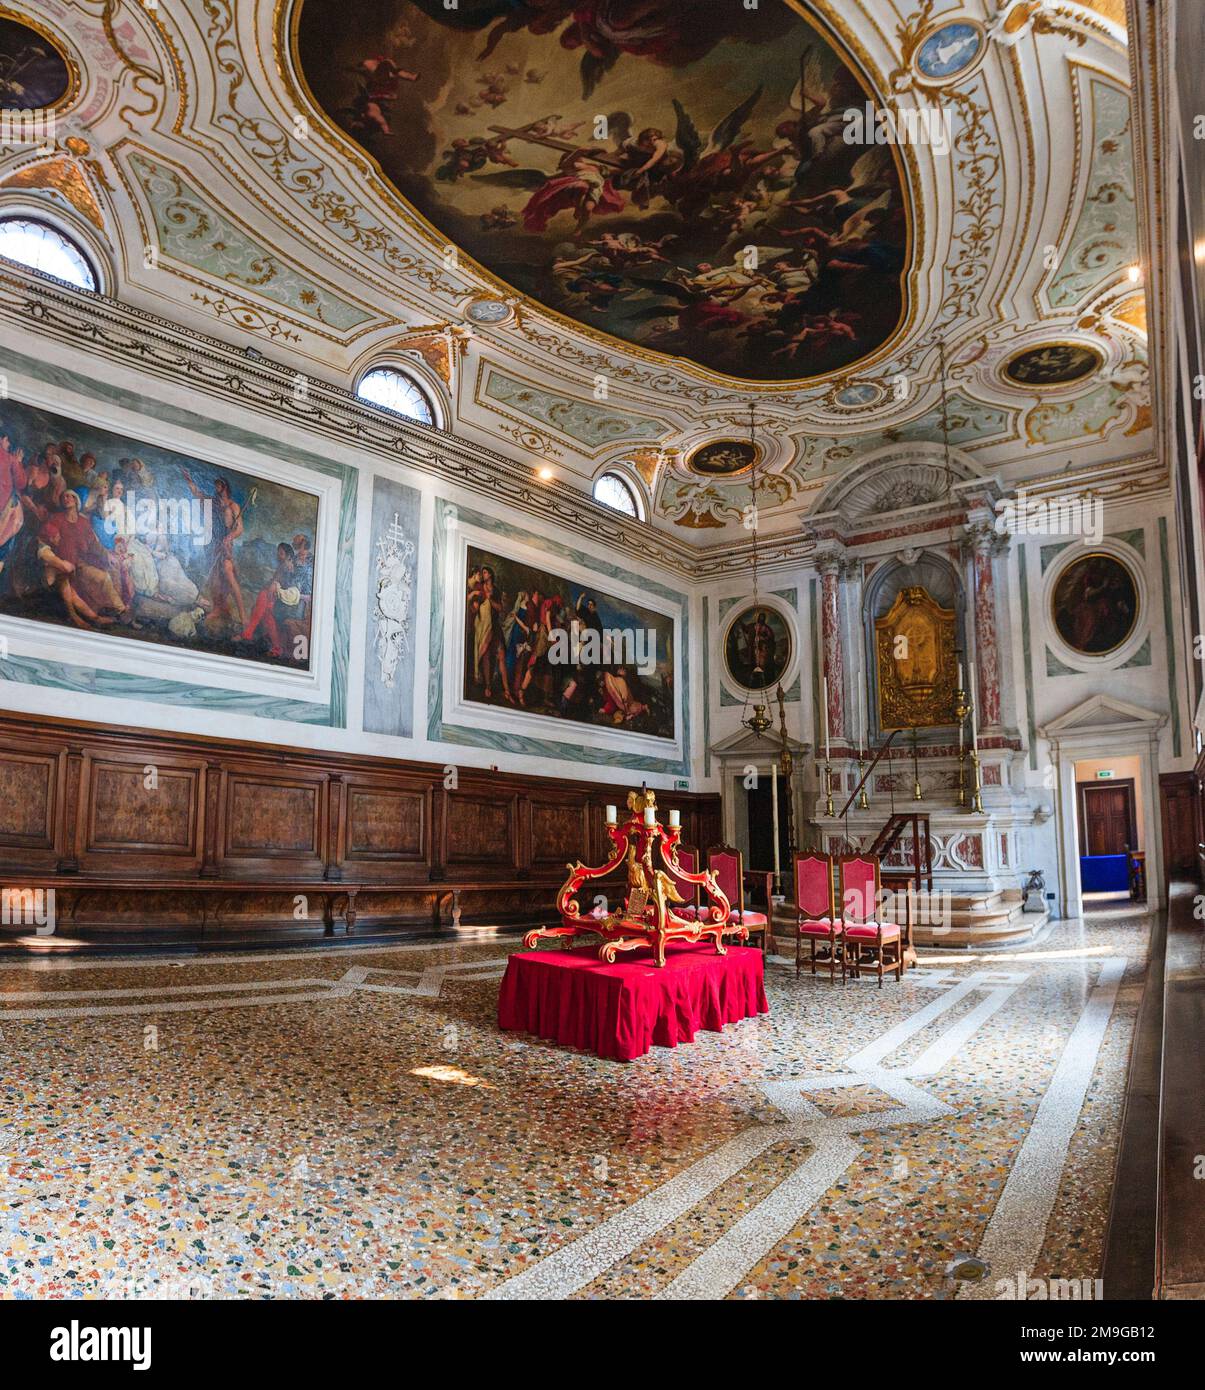 Interior of historic building, Venice, Italy Stock Photo